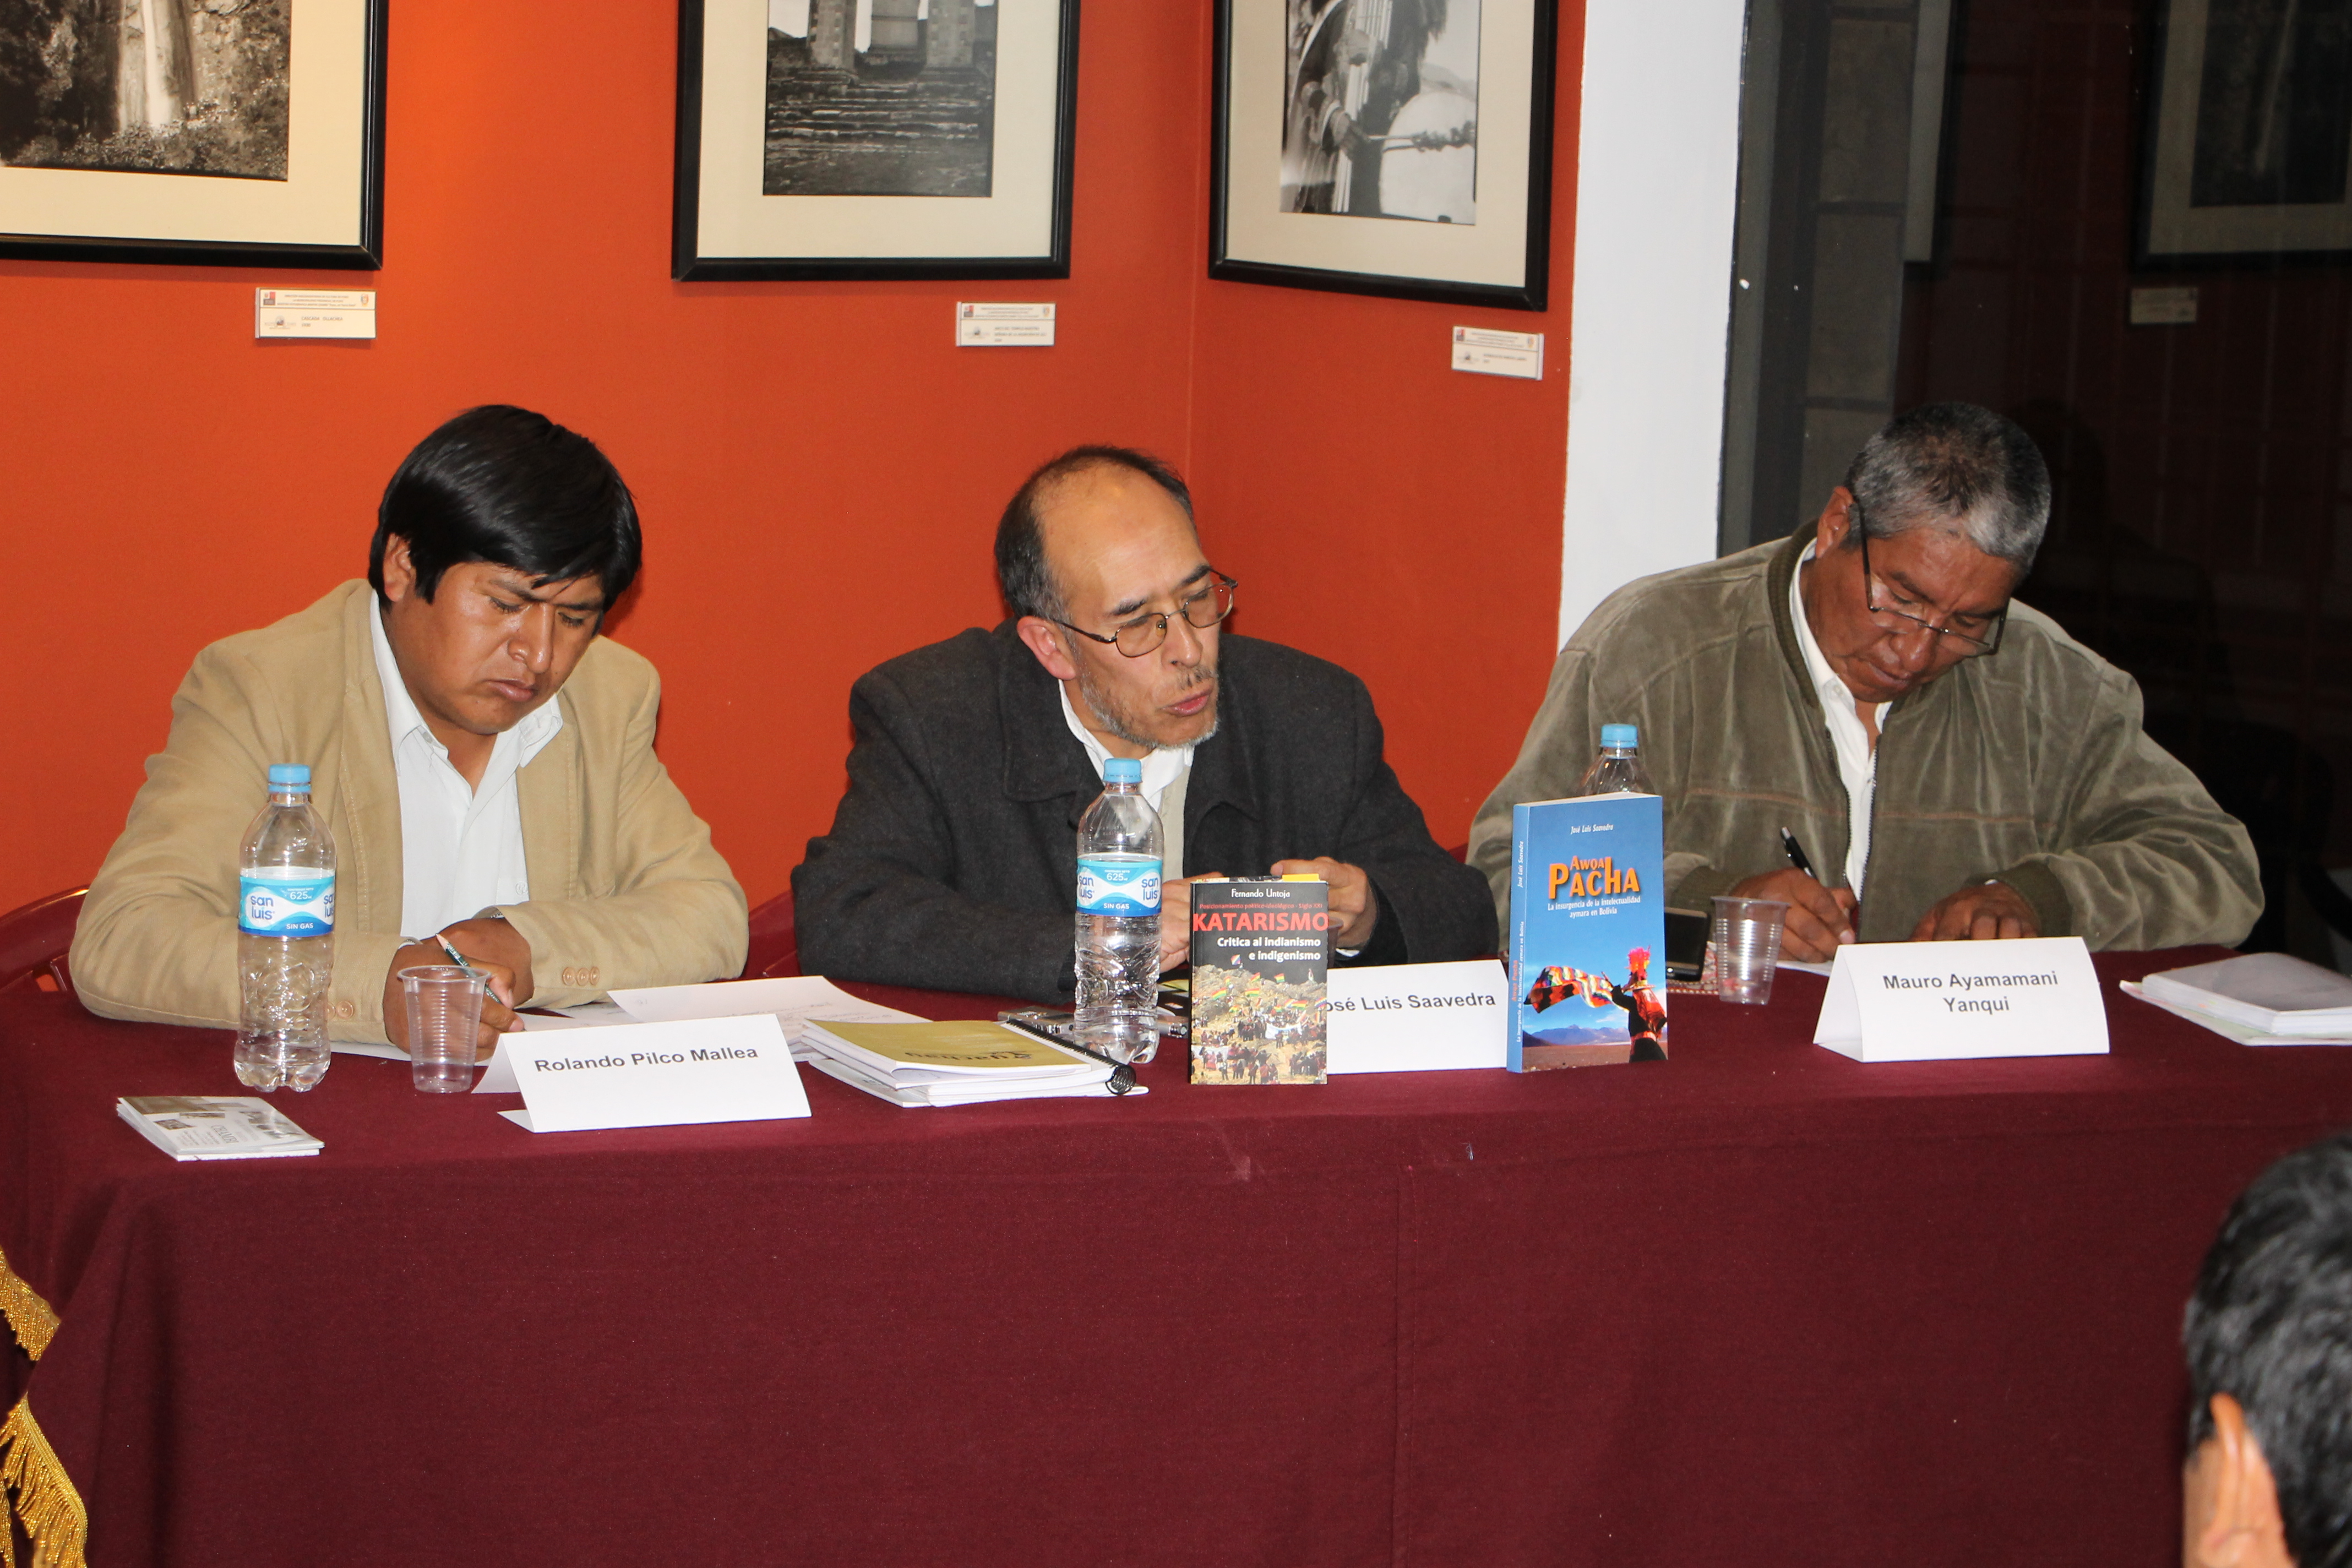 Se presentó el libro: “Awqa Pacha. La insurgencia de la intelectualidad aymara en Bolivia”